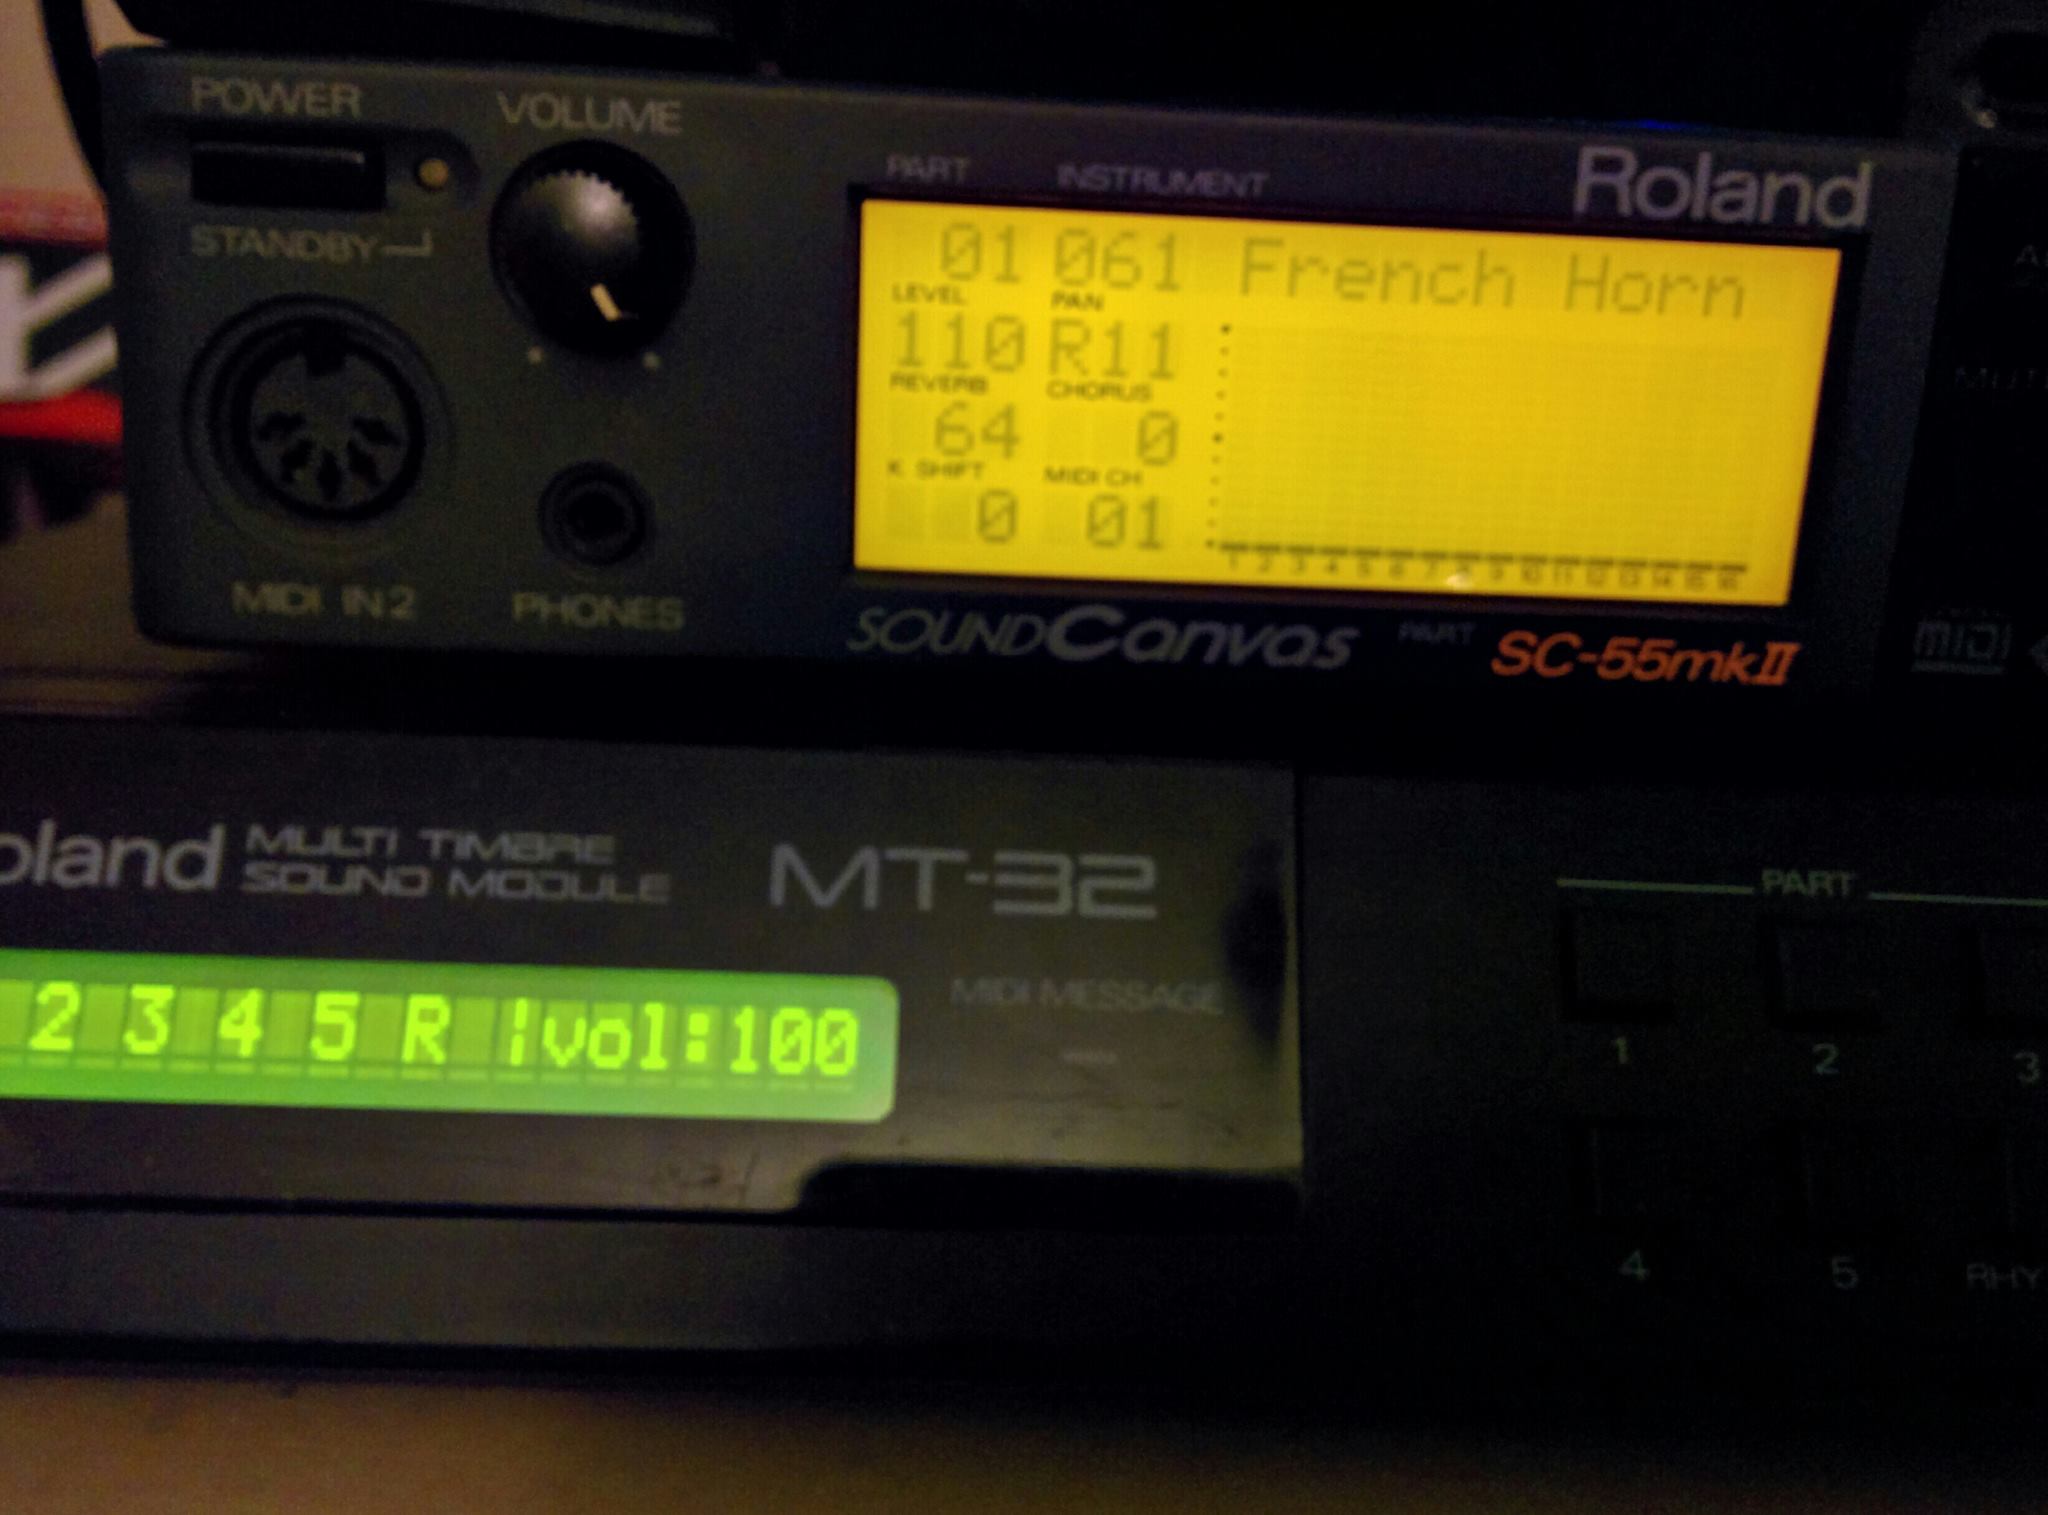 The Hard Stuff: The Roland MT-32 and SC-55mkII MIDI Modules ...